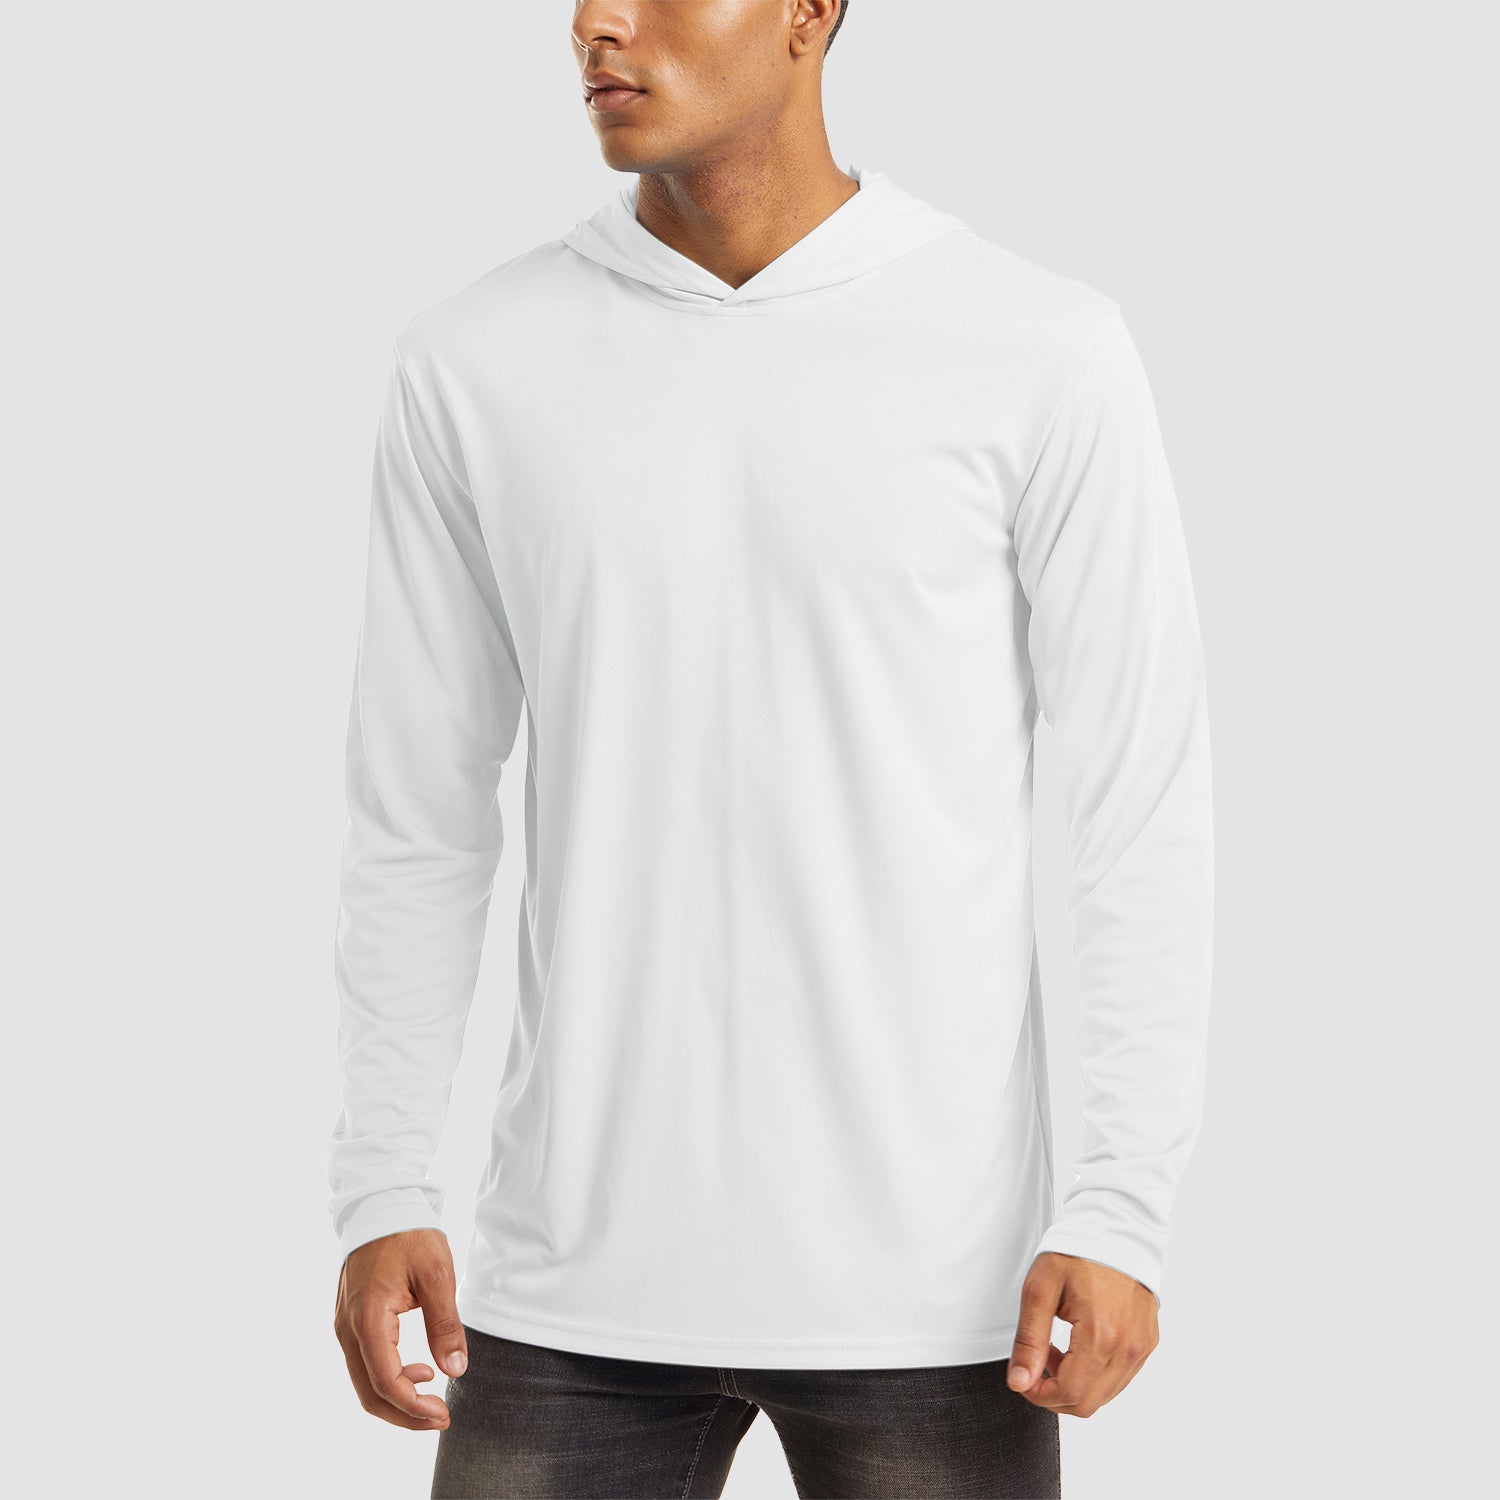 【Buy 4 Get 4th Free】Men's Long Sleeve Hooded Shirt UPF 50+ Athletic Shirts, Light Pink / XS